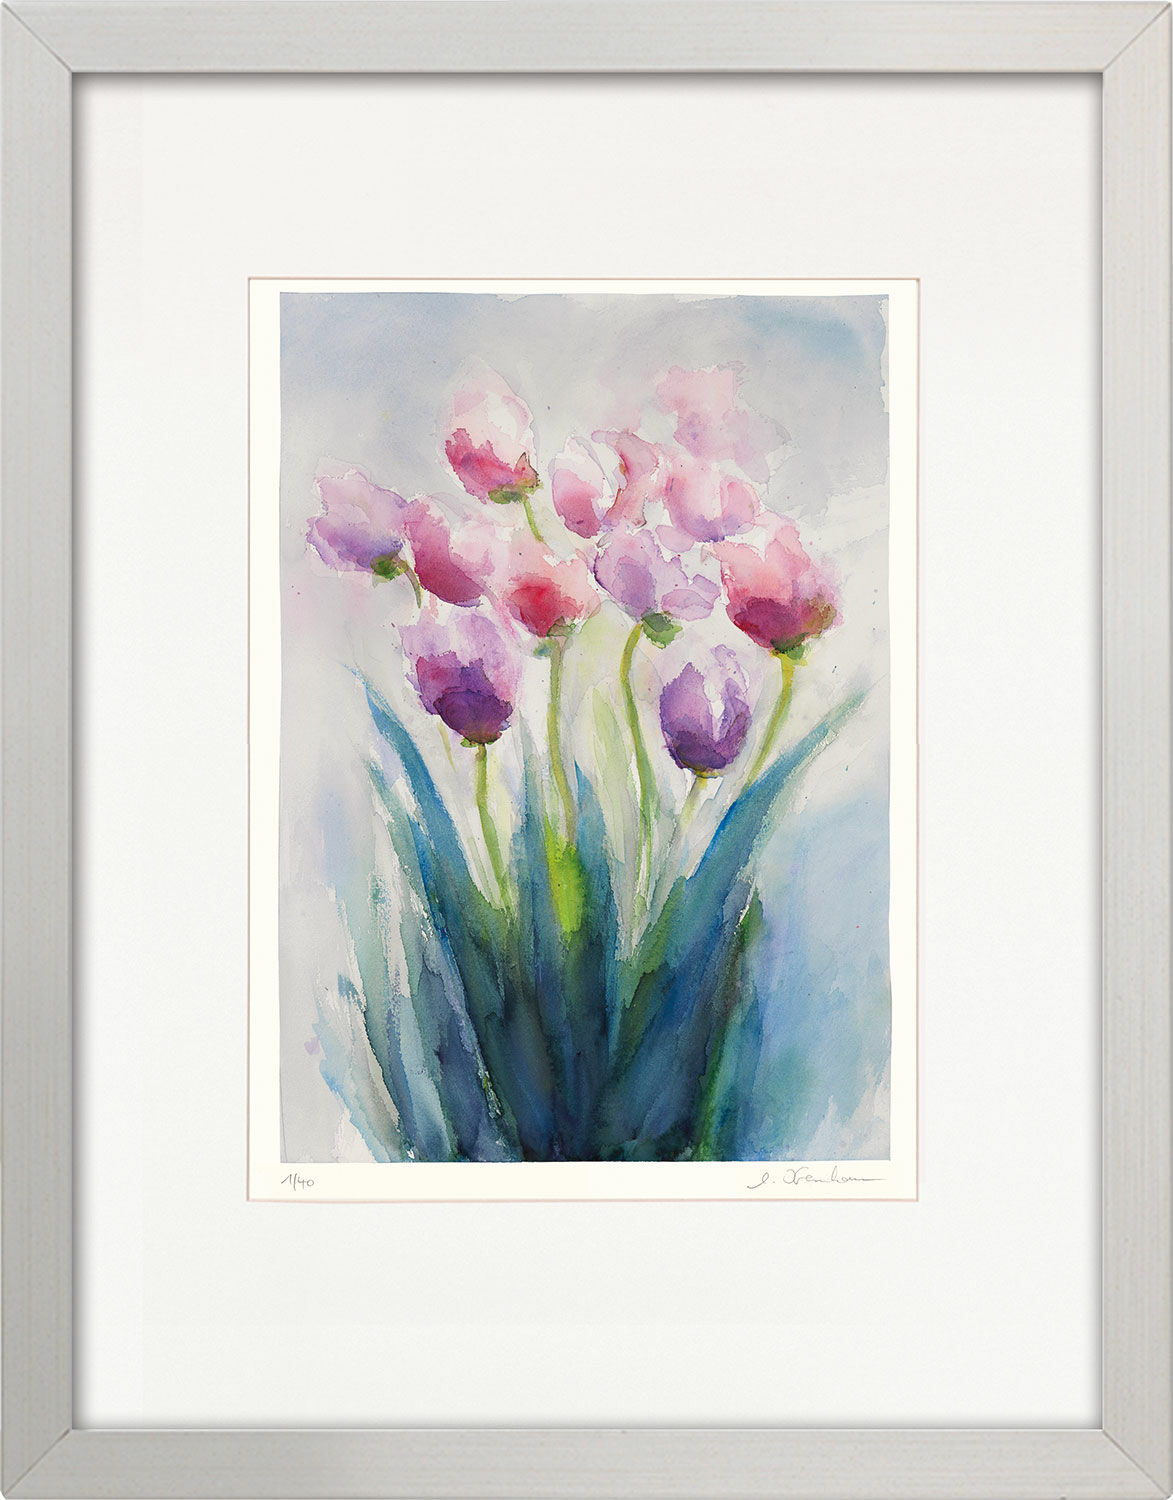 Picture "Tulips 2016", framed by Christine Kremkau